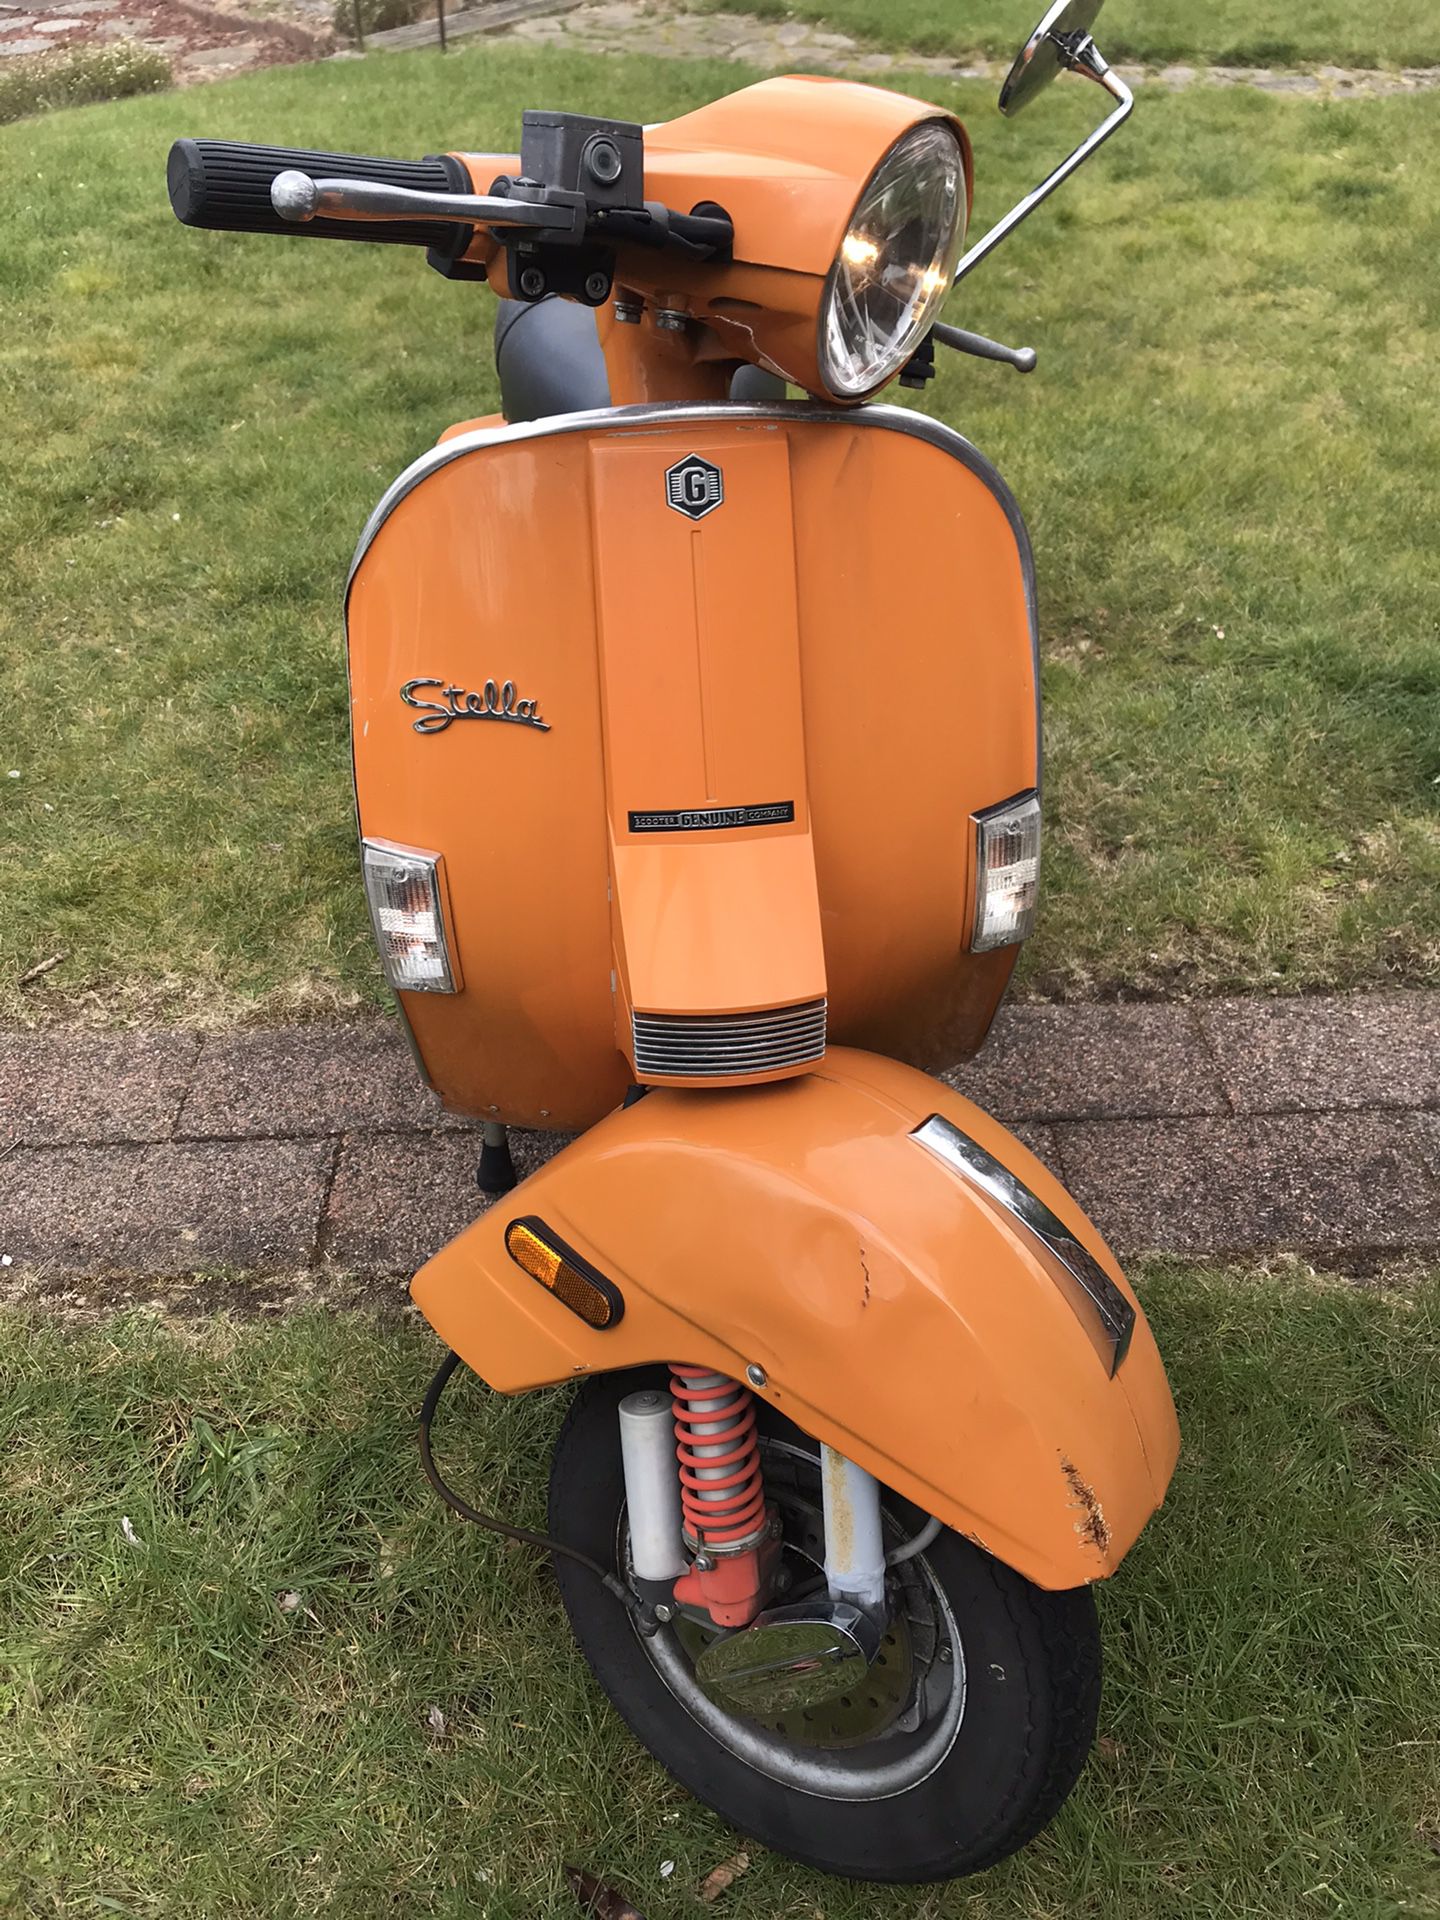 Genuine Stella 150cc scooter